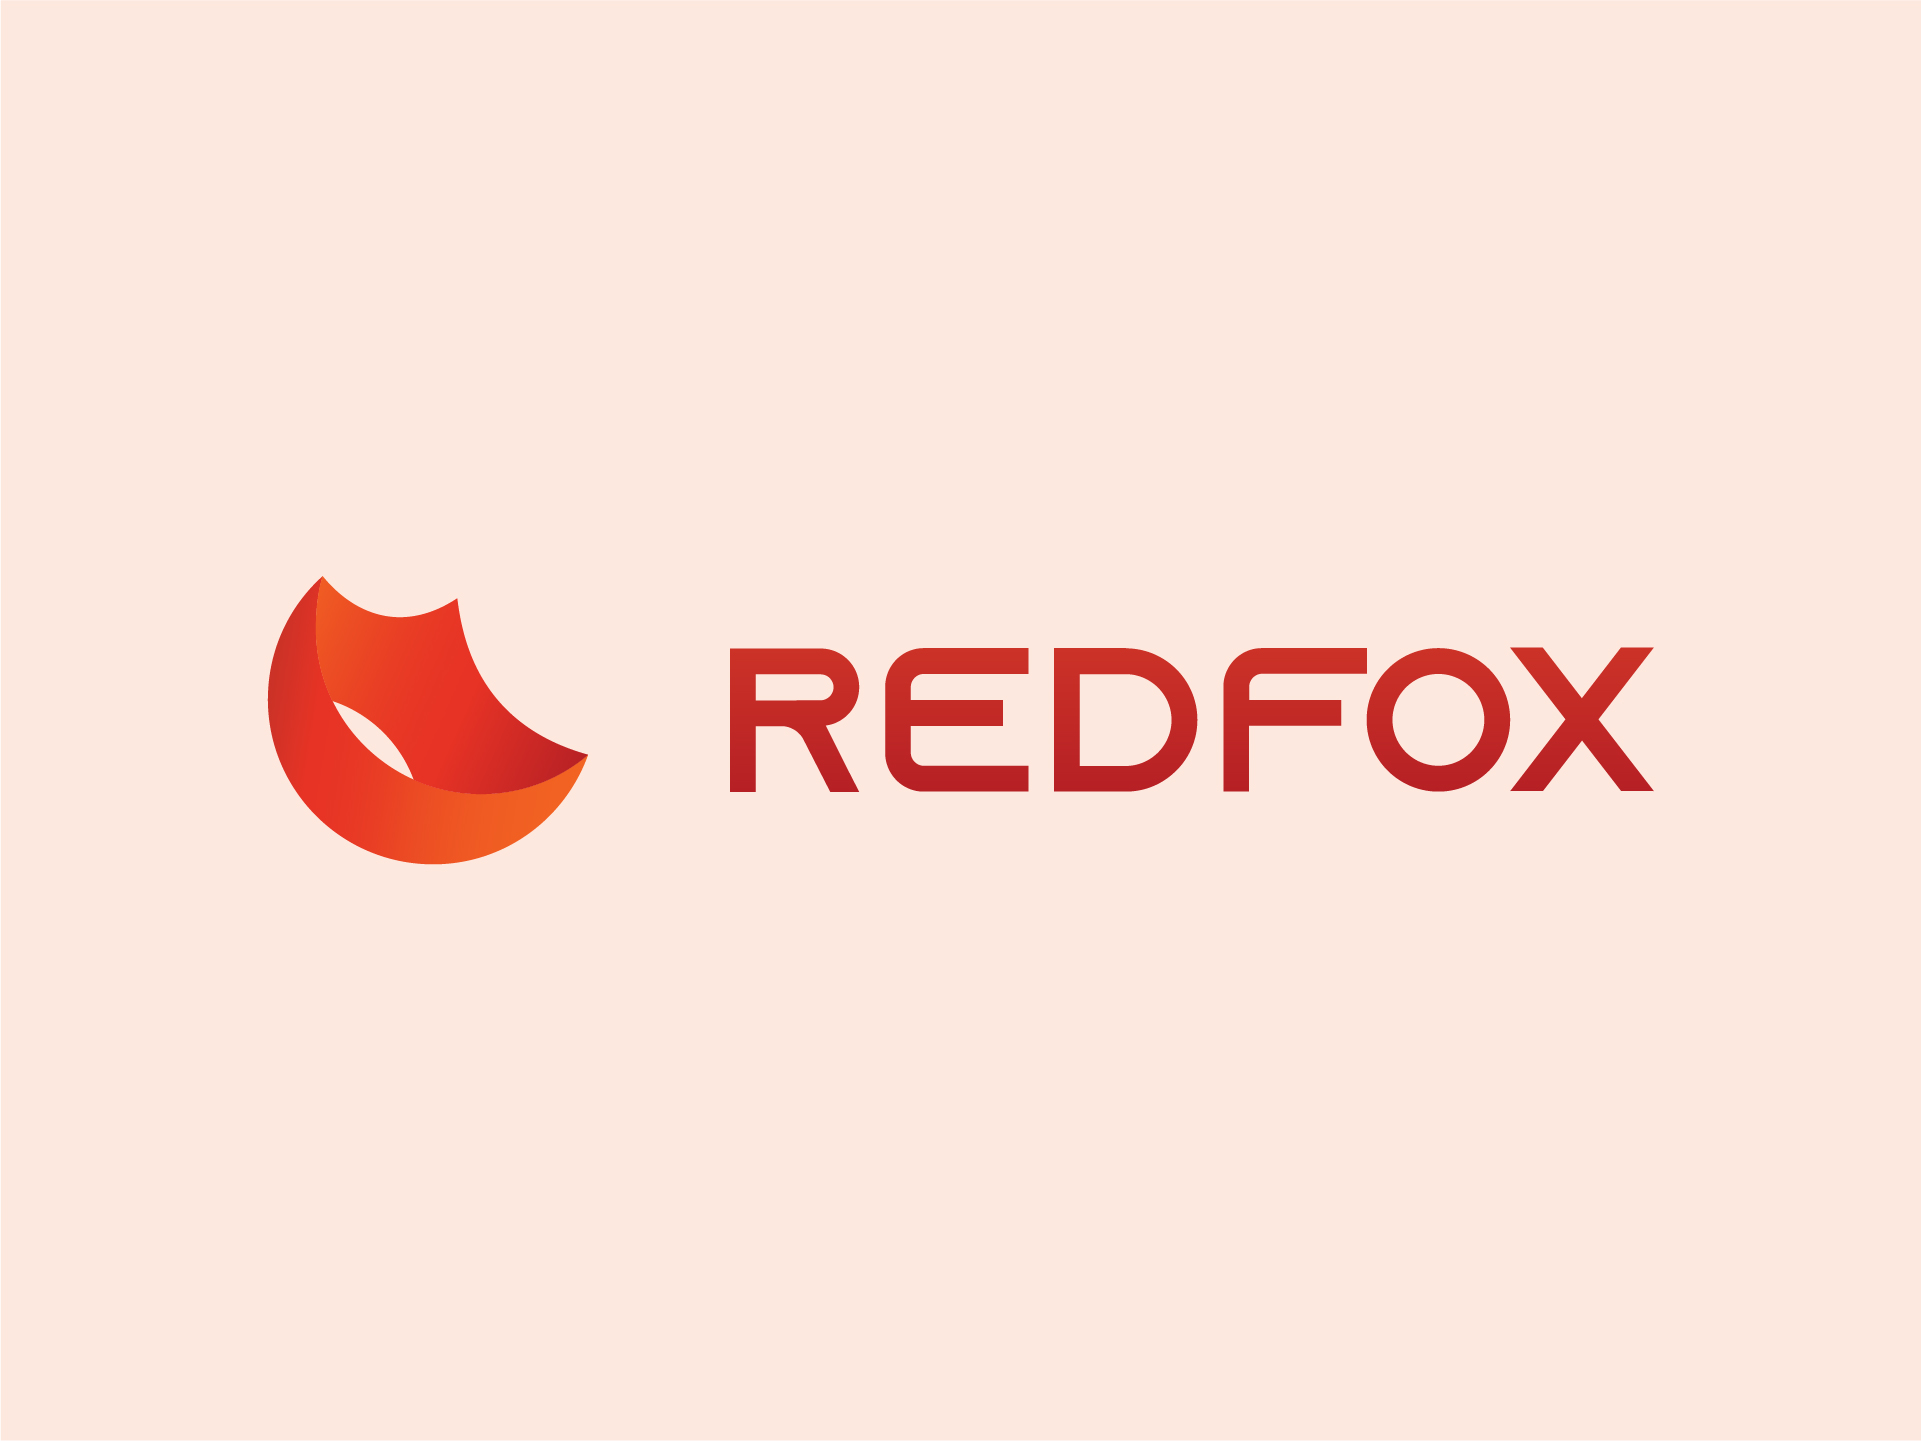 RedFox logo lock up